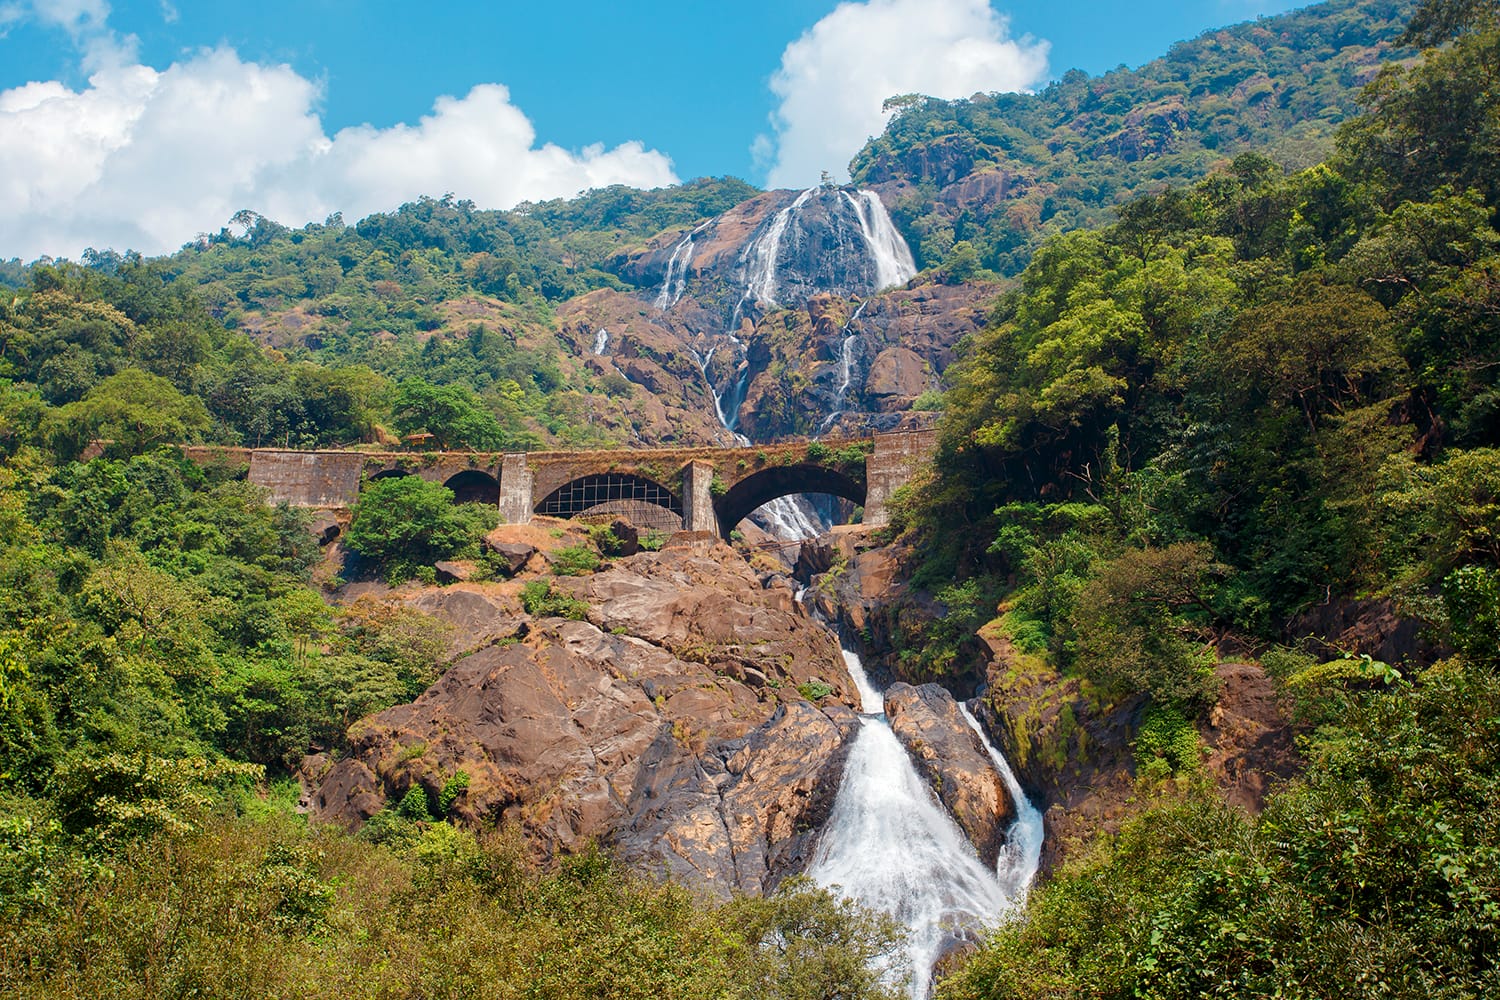 Beautiful view of the Dudhsagar waterfall and railroad bridge in Goa, India